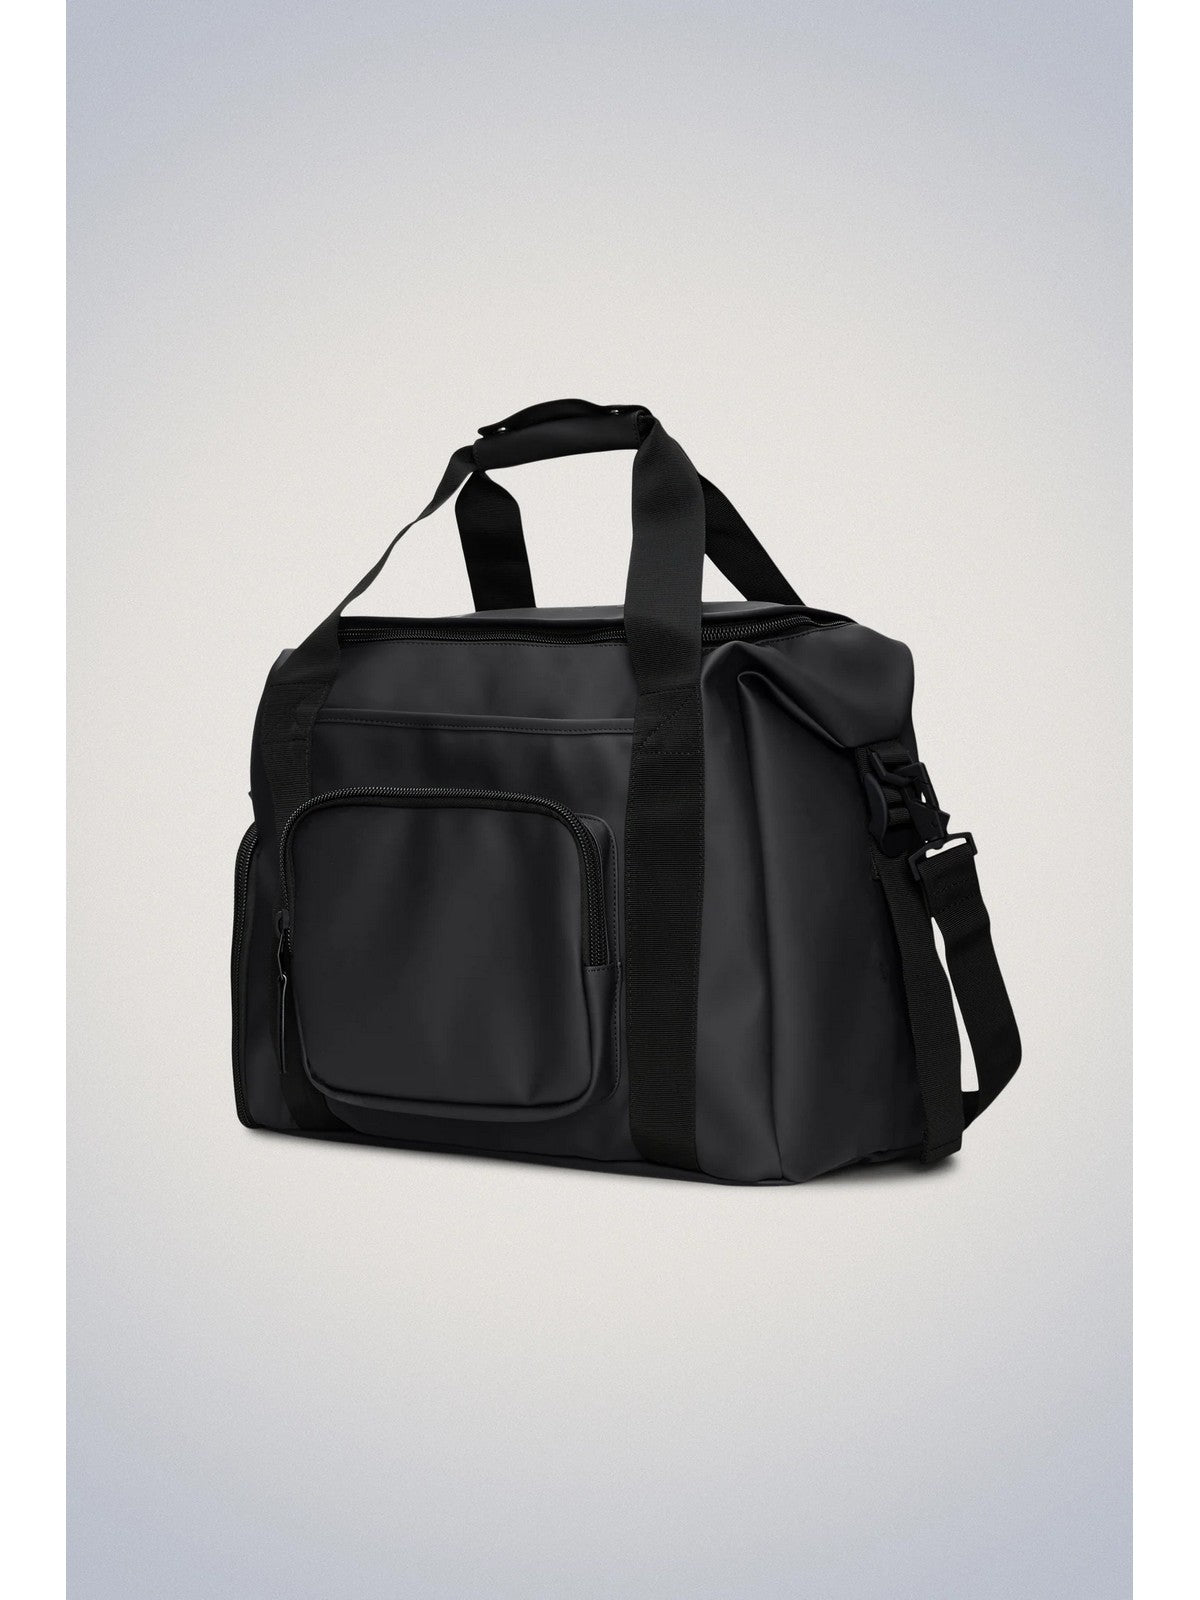 RAINS Borsa Unisex adulto Texel Kit Bag Large W3 14810 01 Black Nero